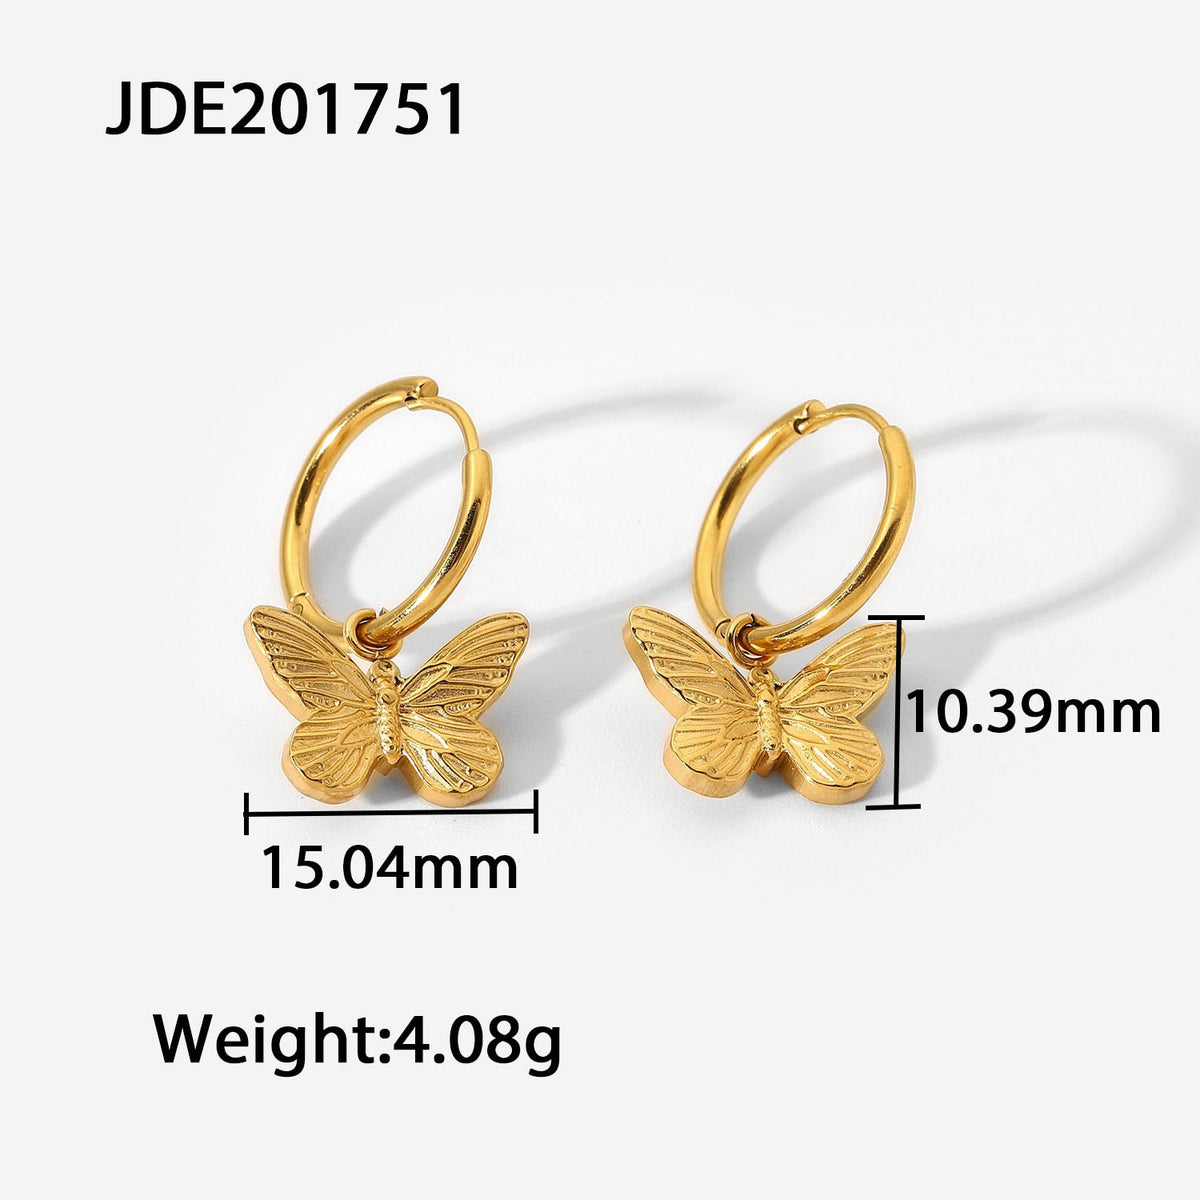 Gold Butterfly Charm Earrings Strip Texture Stainless Steel Jewelry Women Boho18K PVD Plated Hoop Earrings Cute Gift